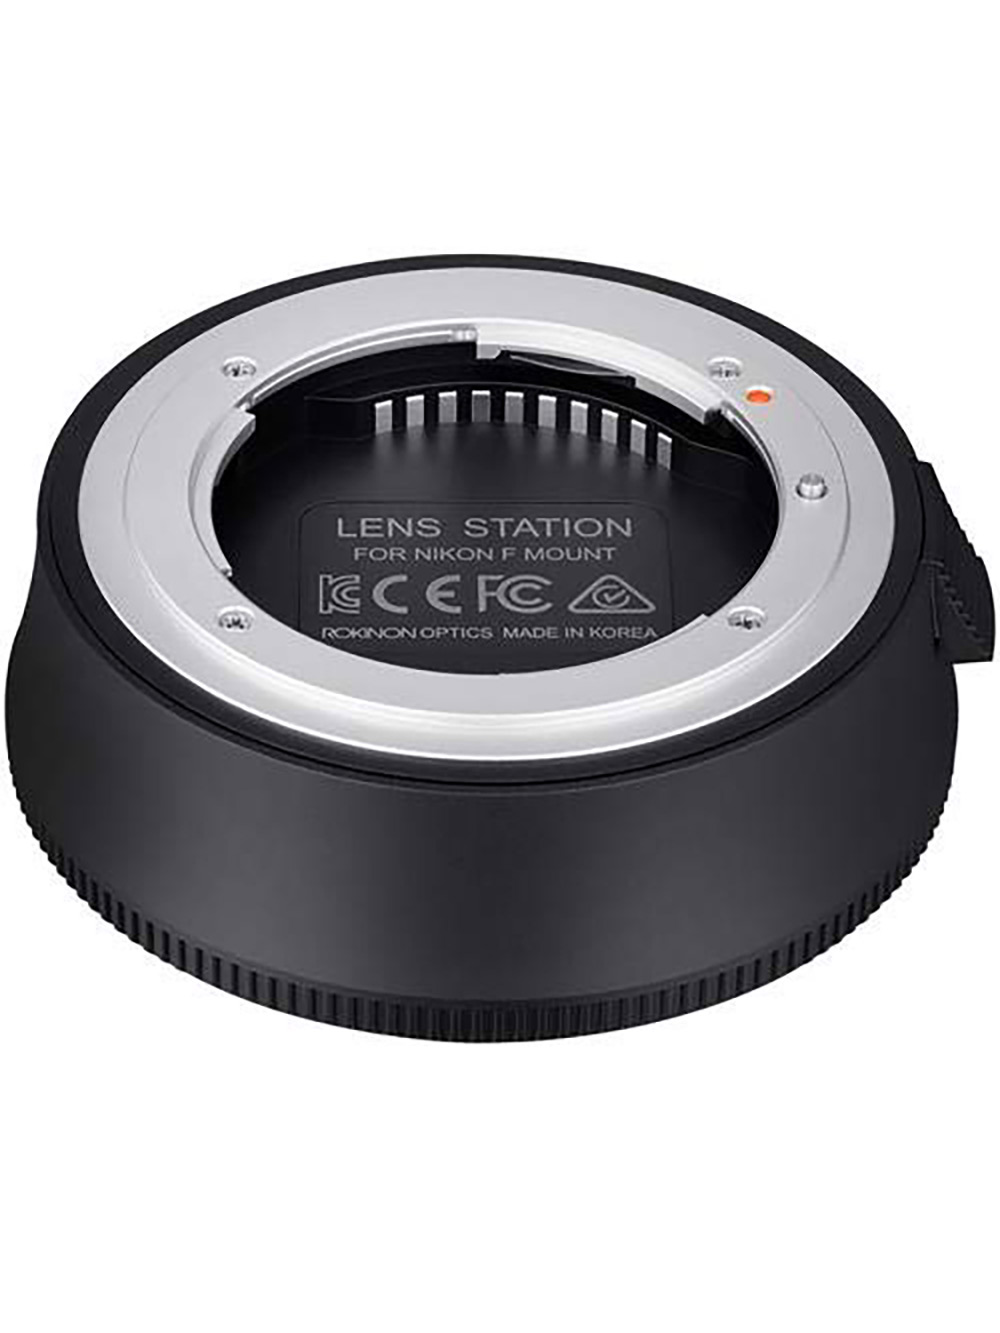 Lens Station for Nikon